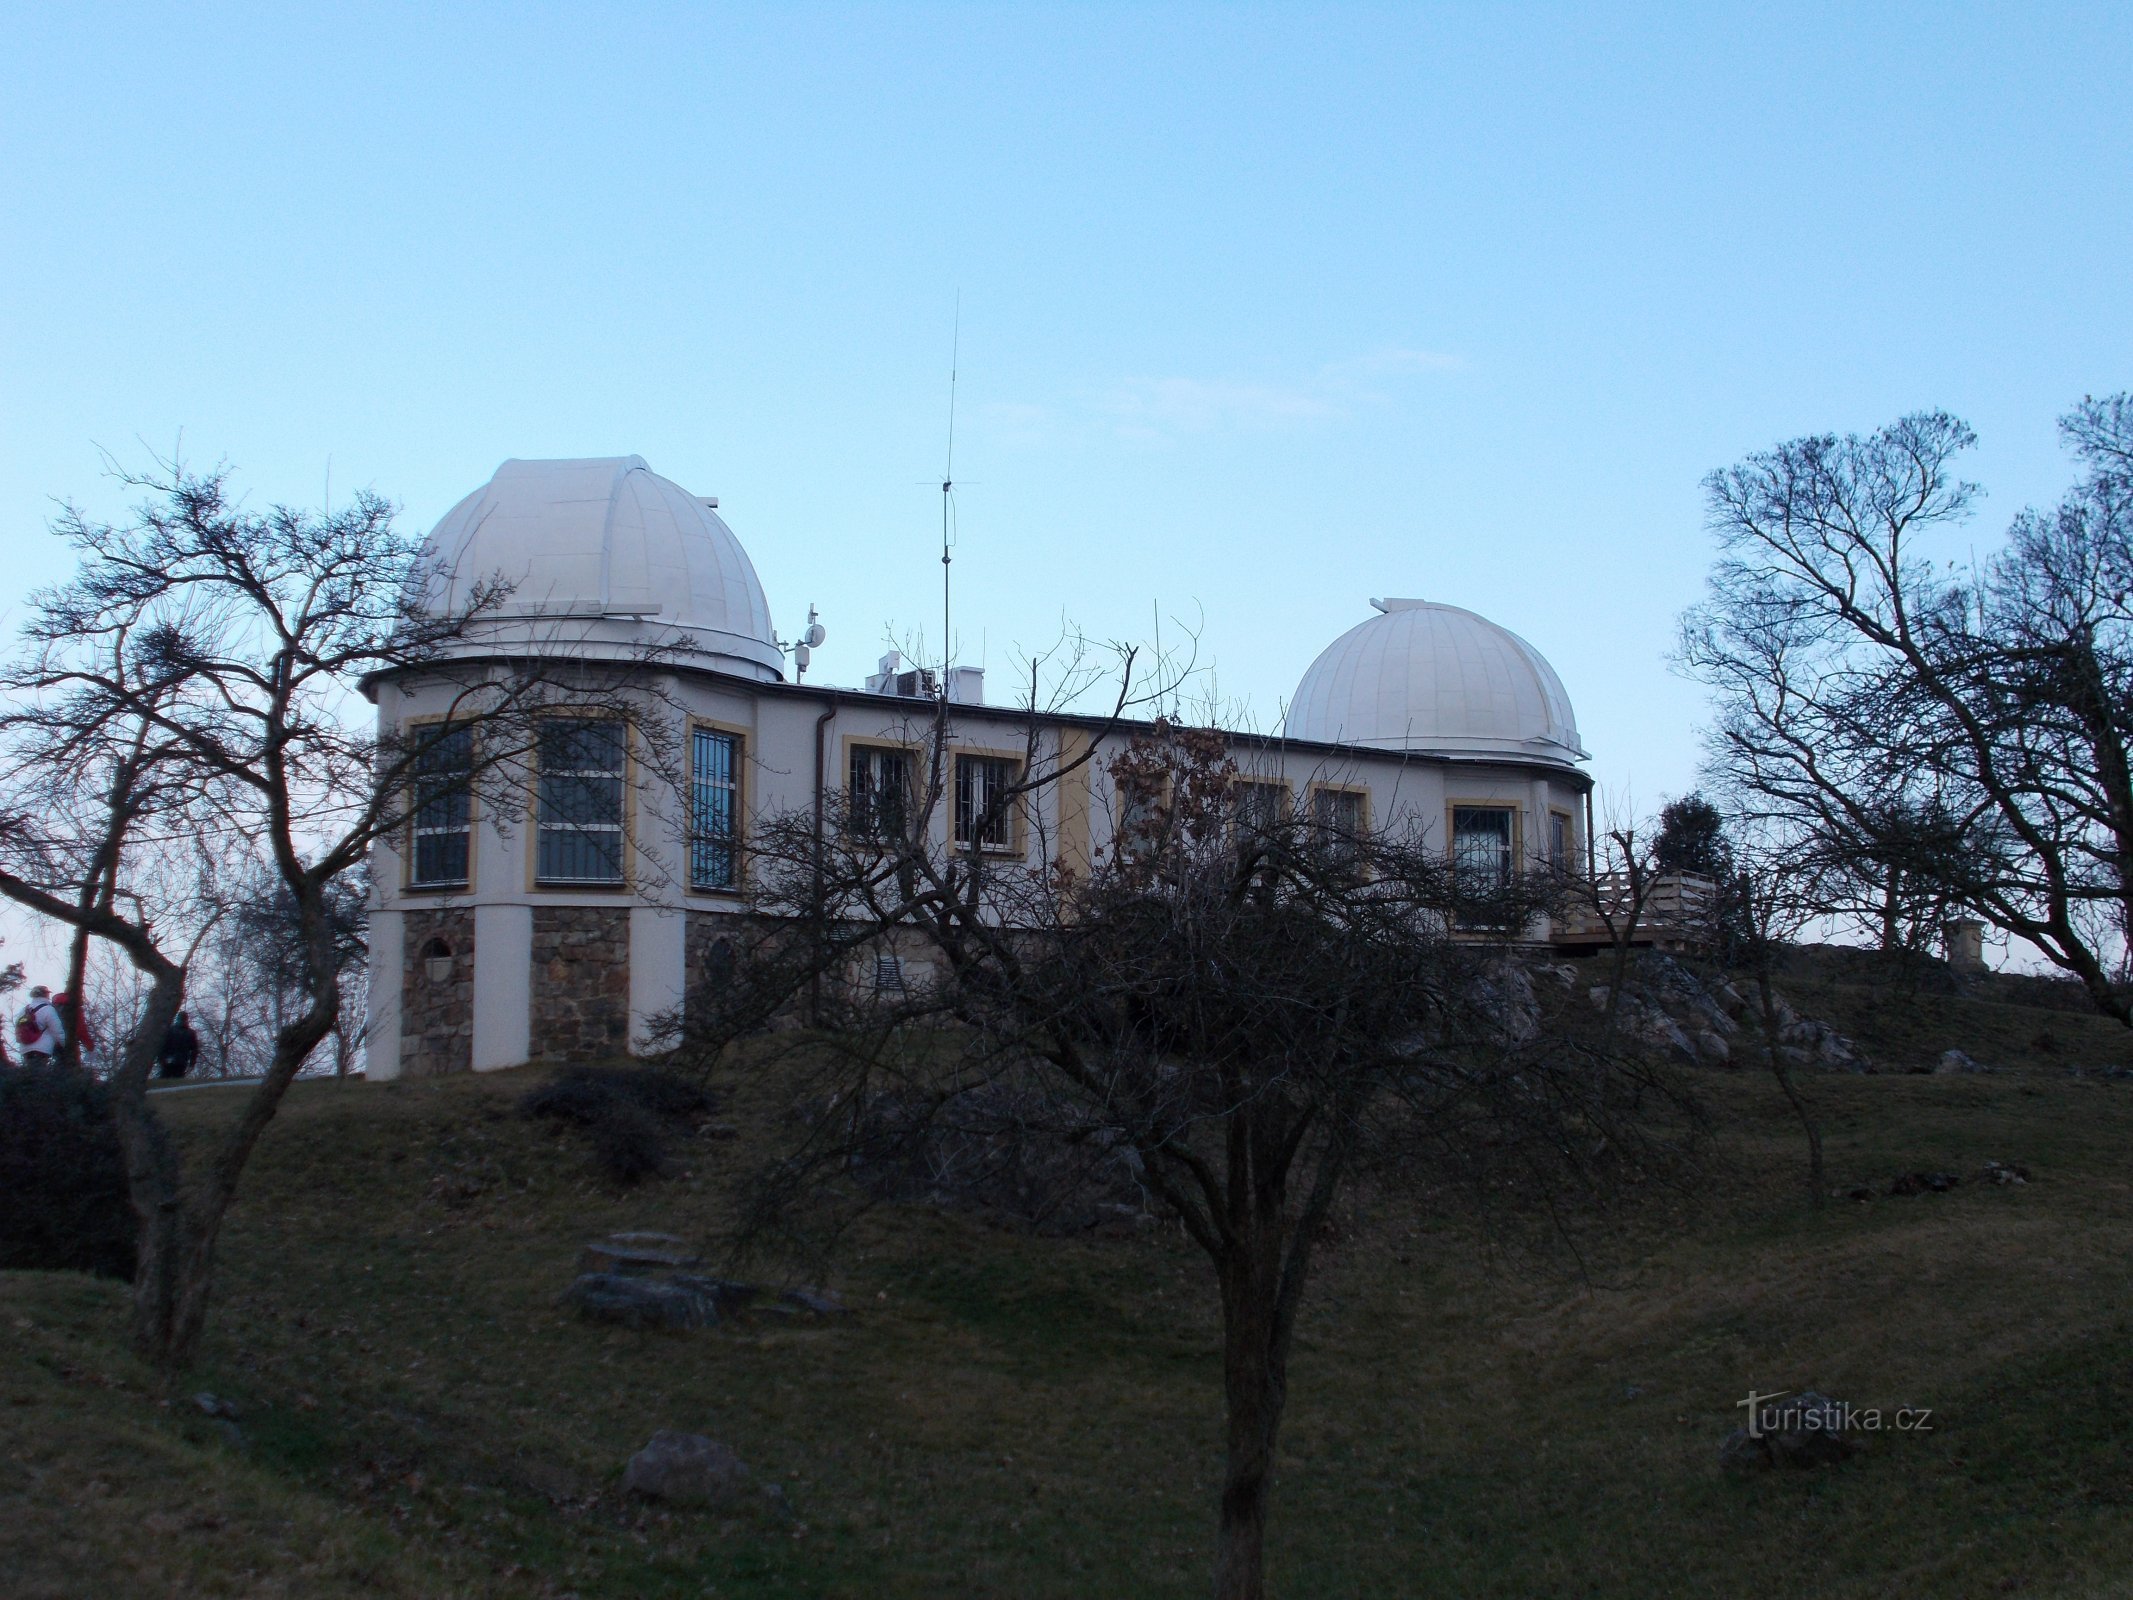 På utkik - Đáblice observatorium